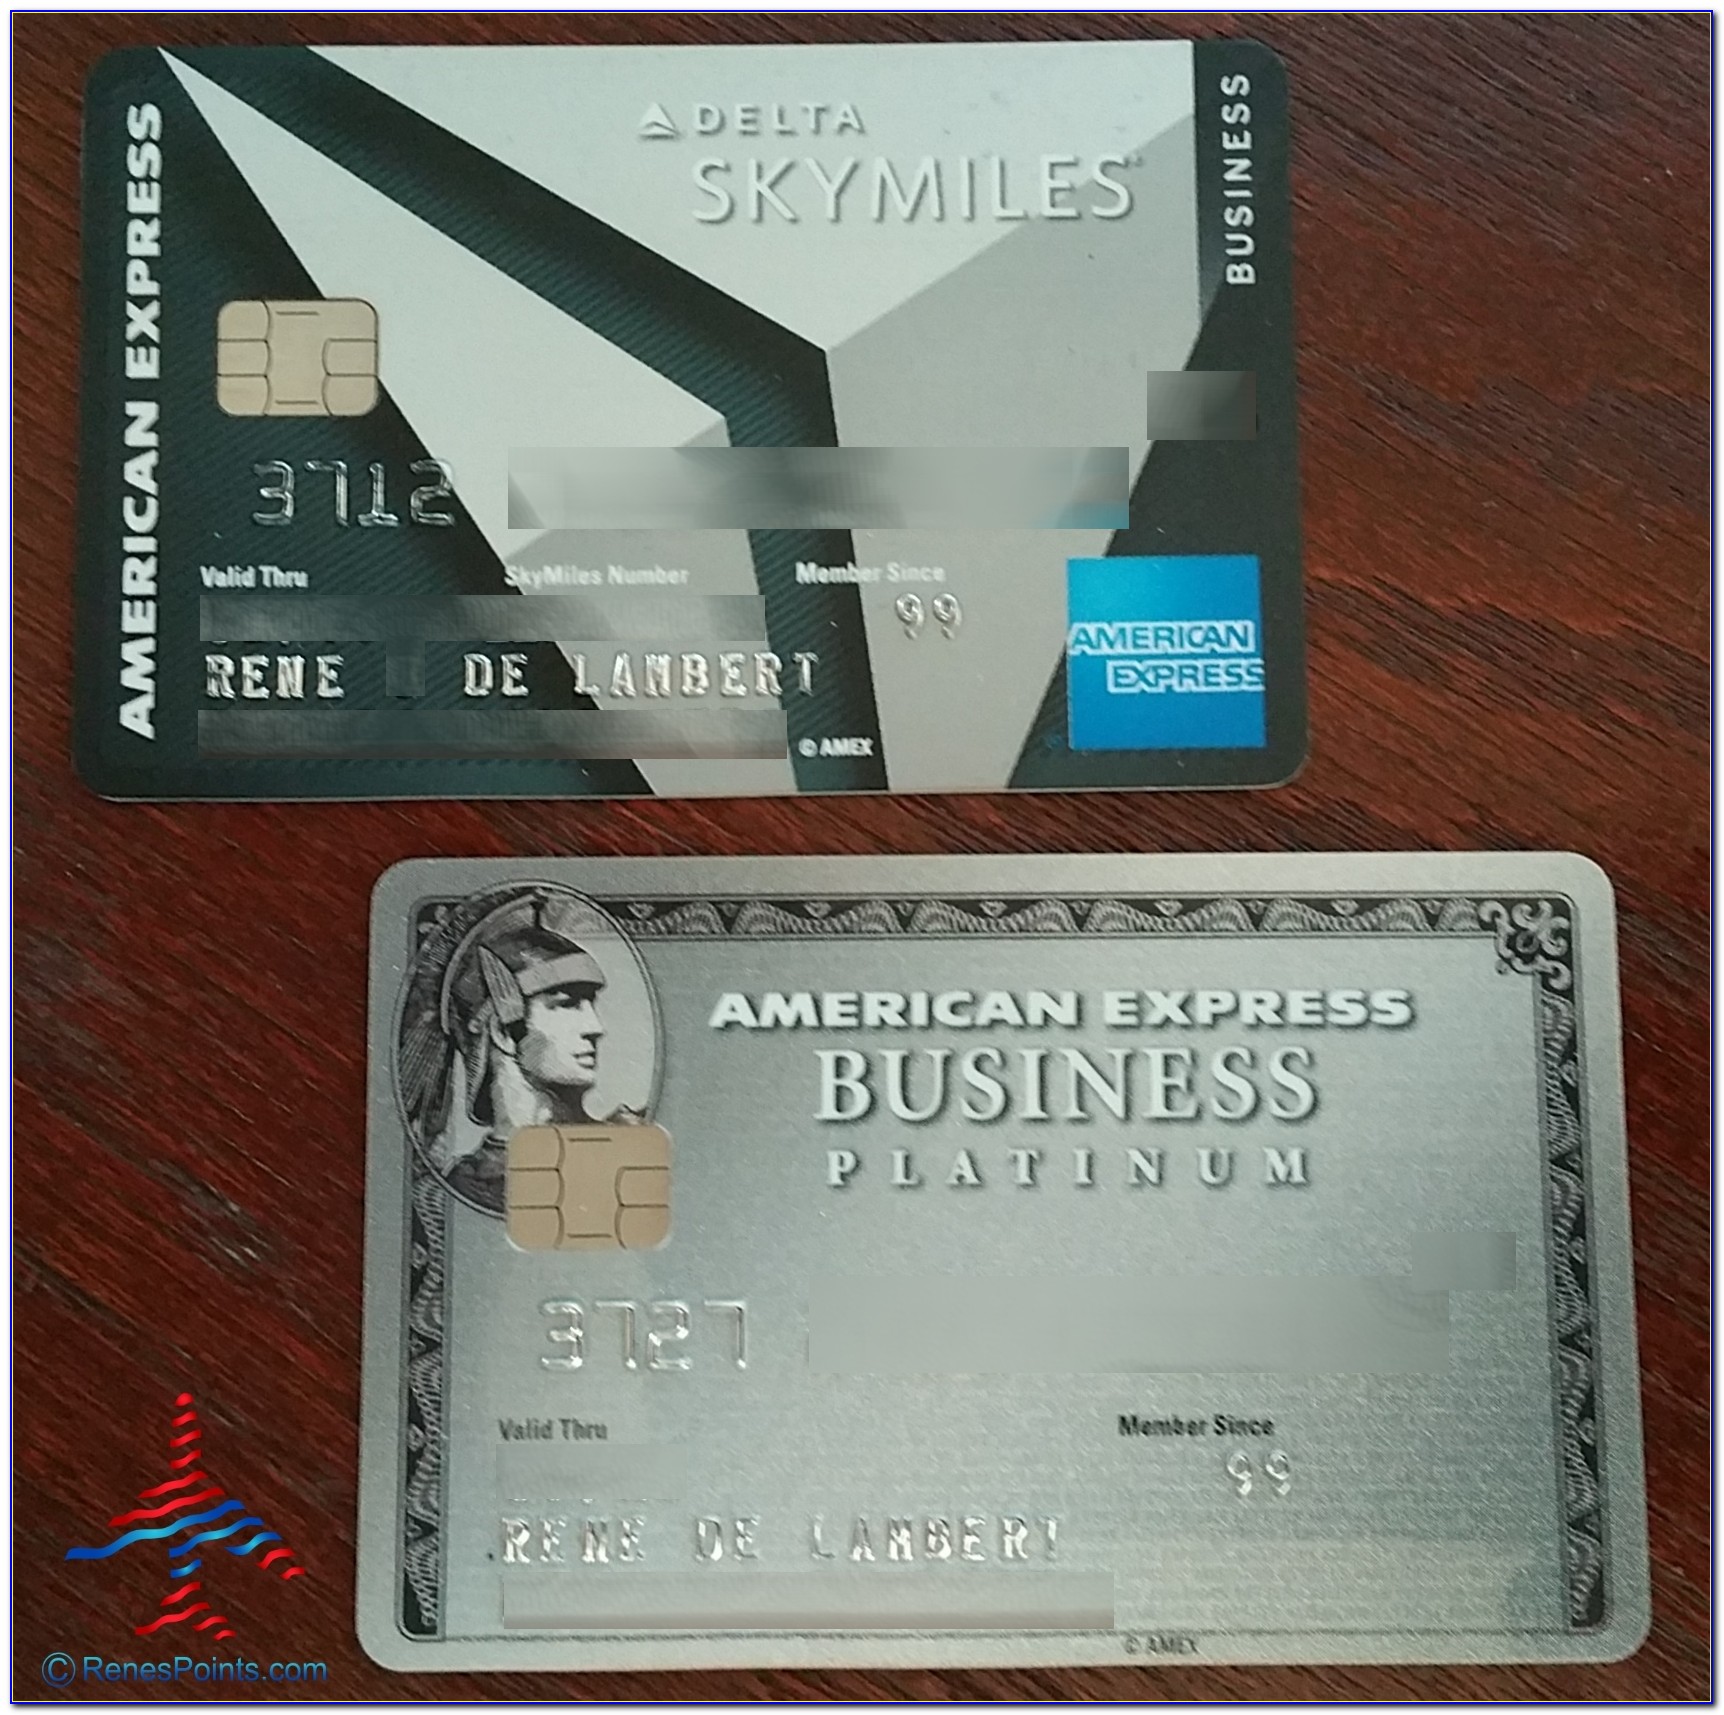 Amex Platinum Business Card Insurance